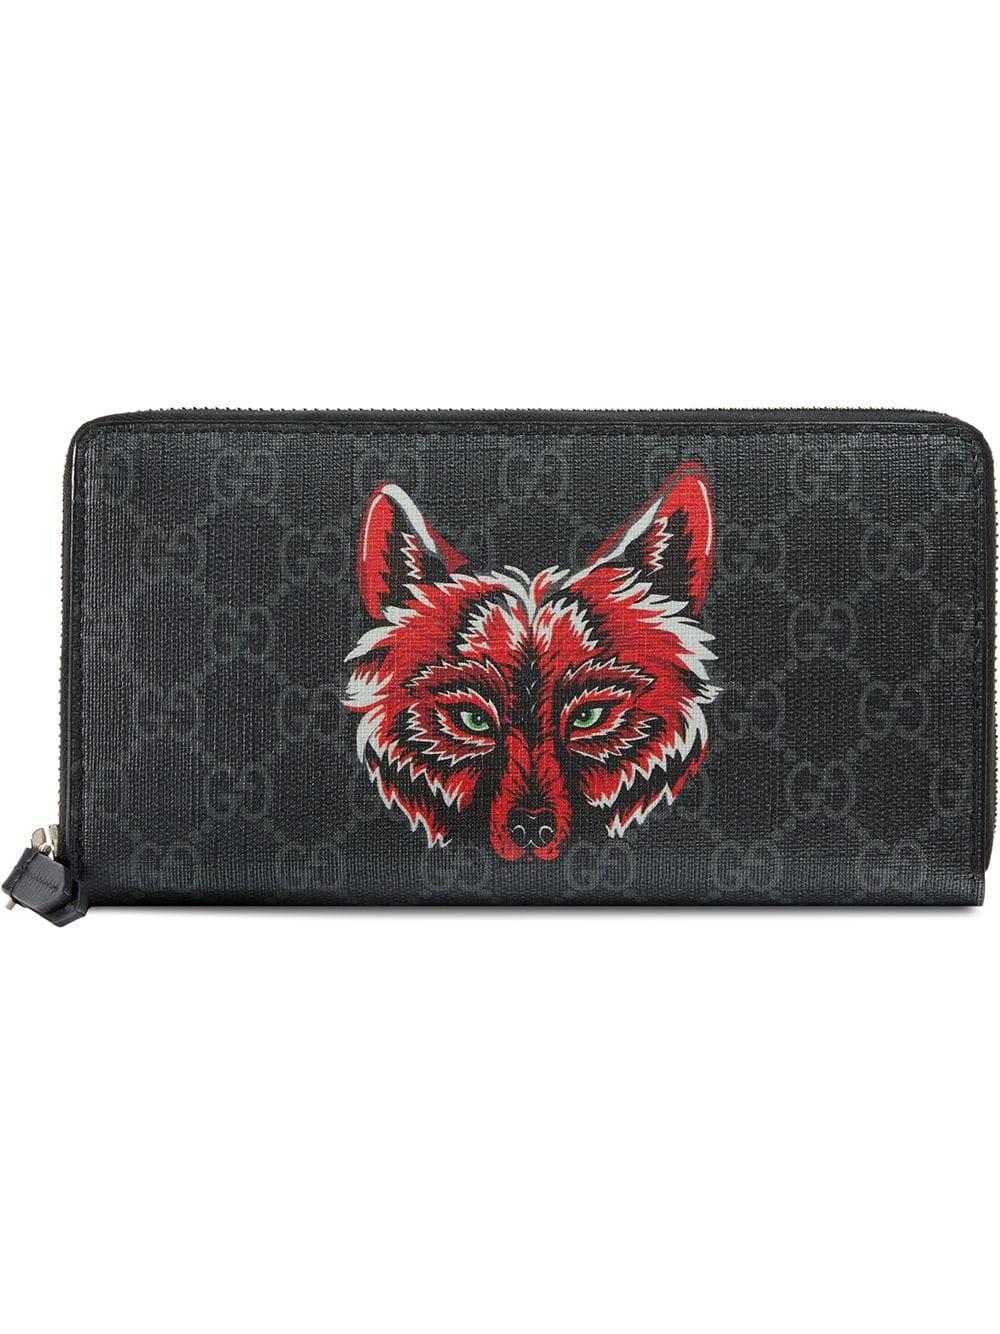 Gucci Fox Print Wallet in Black for Men | Lyst